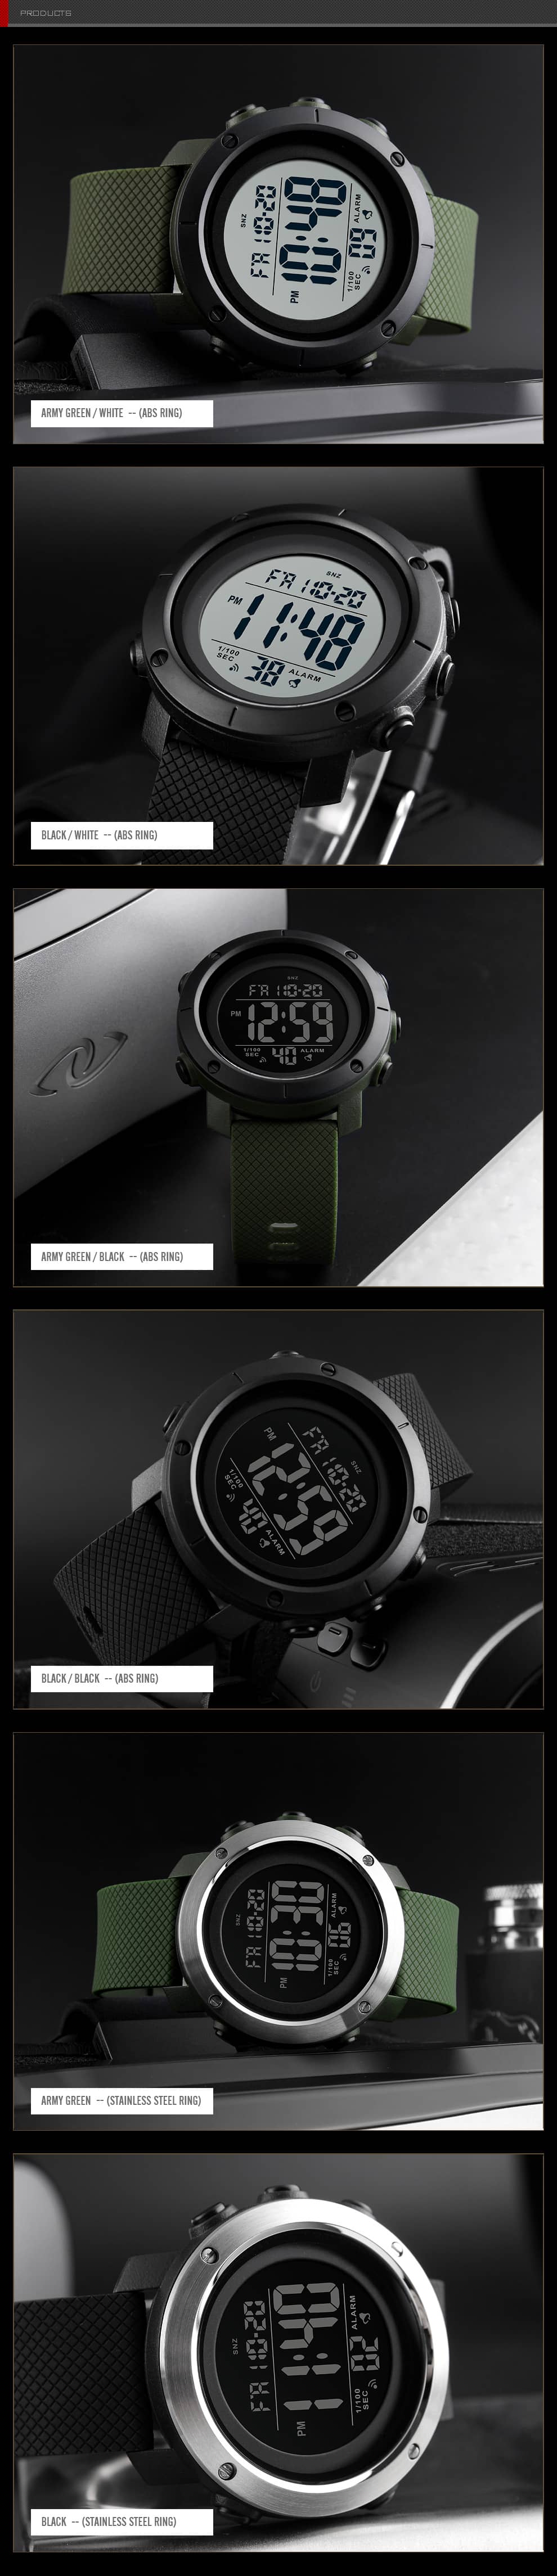 Big Digital Watch for Men with 5ATM Waterproof Luminous Stopwatch Alarm Date Week Display - Findtime